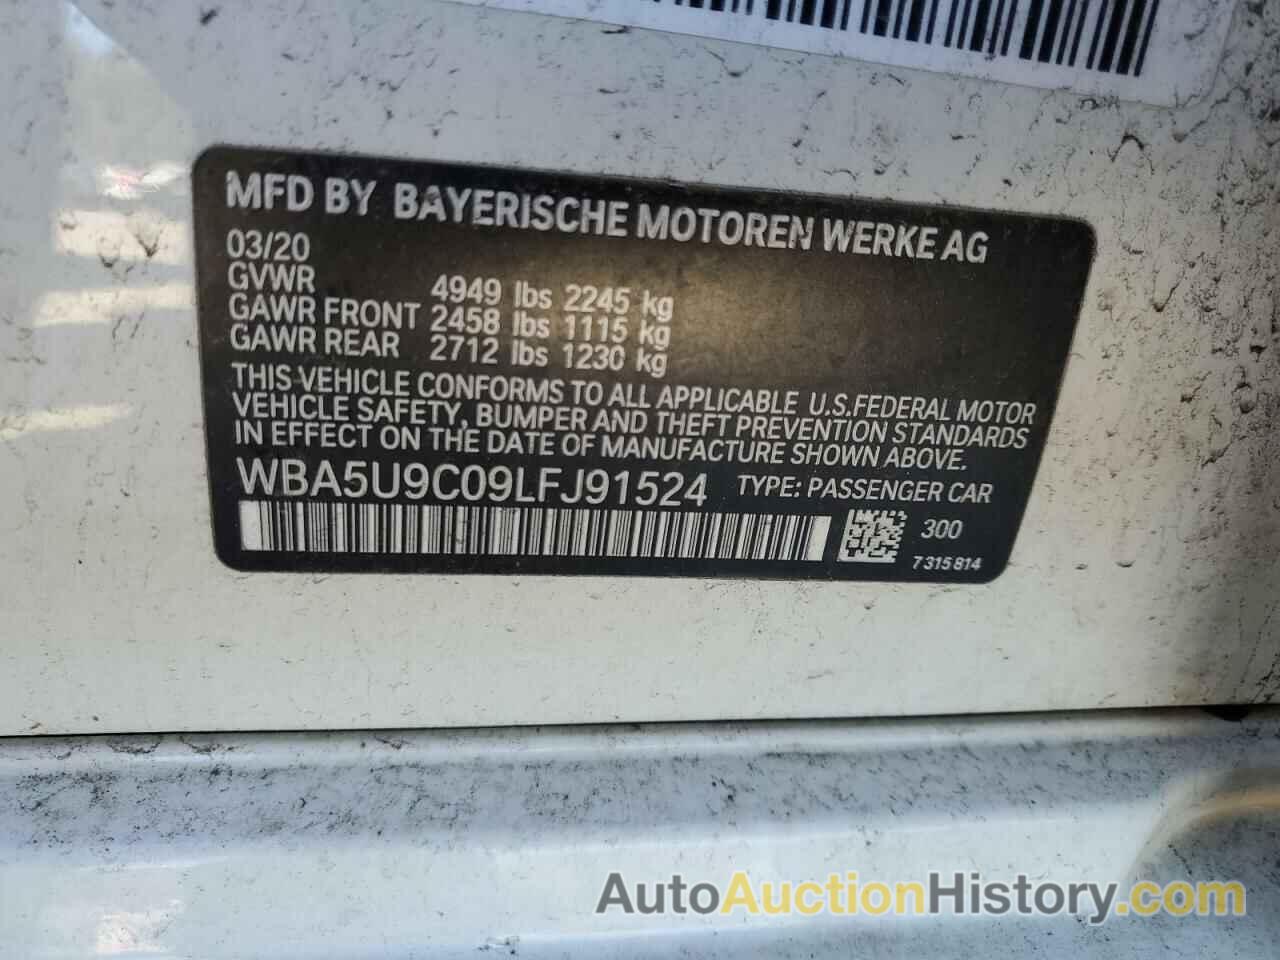 BMW M3, WBA5U9C09LFJ91524